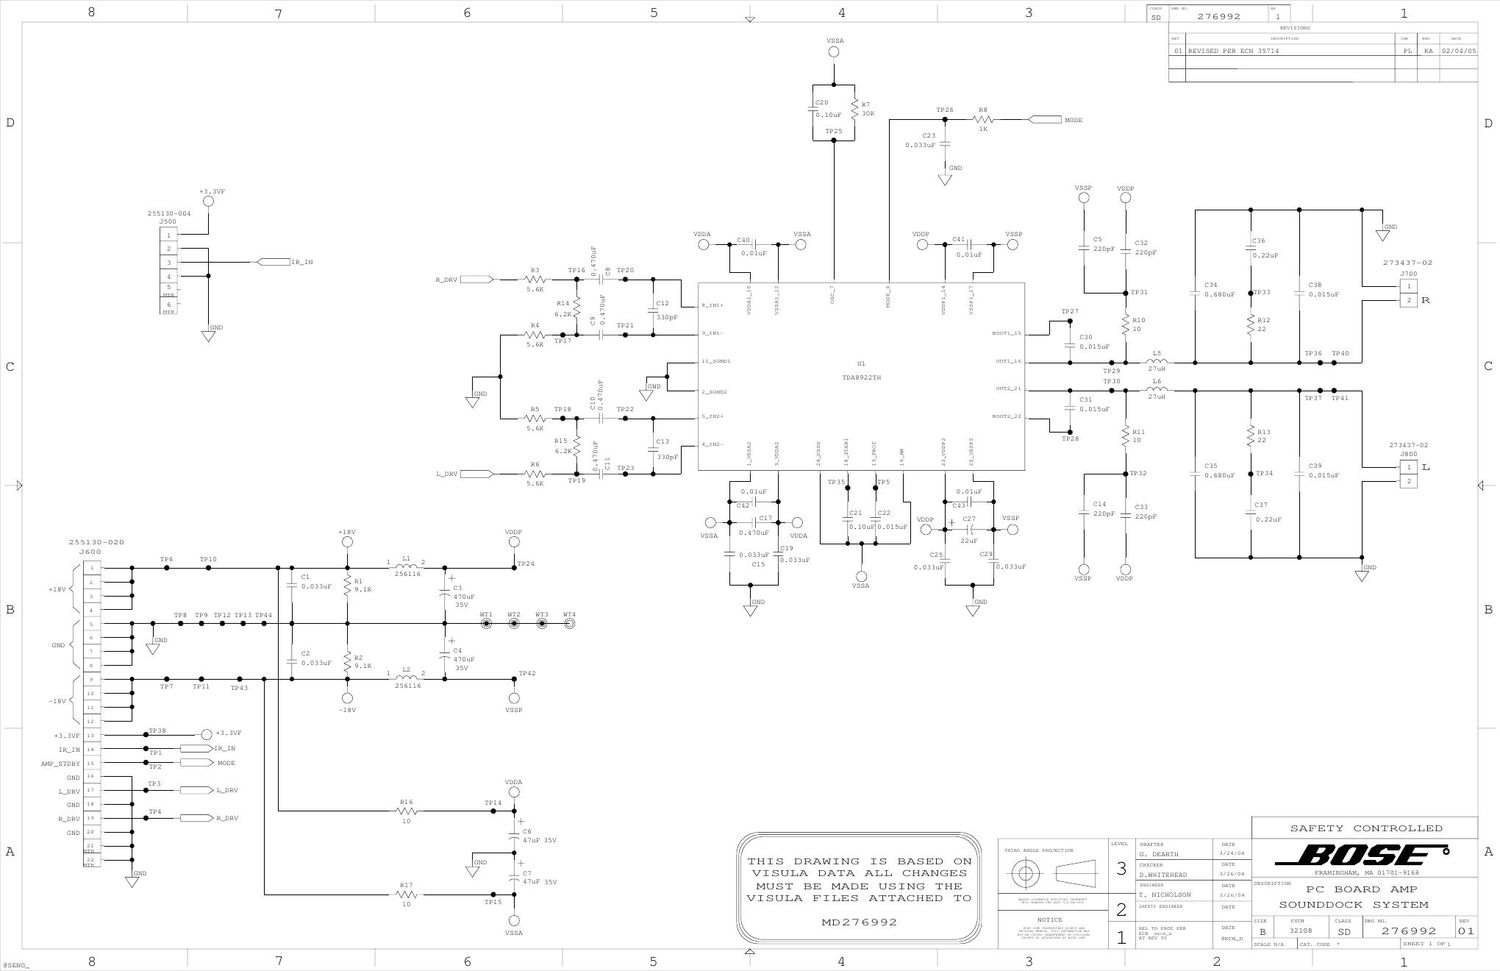 bose sounddock system schematics